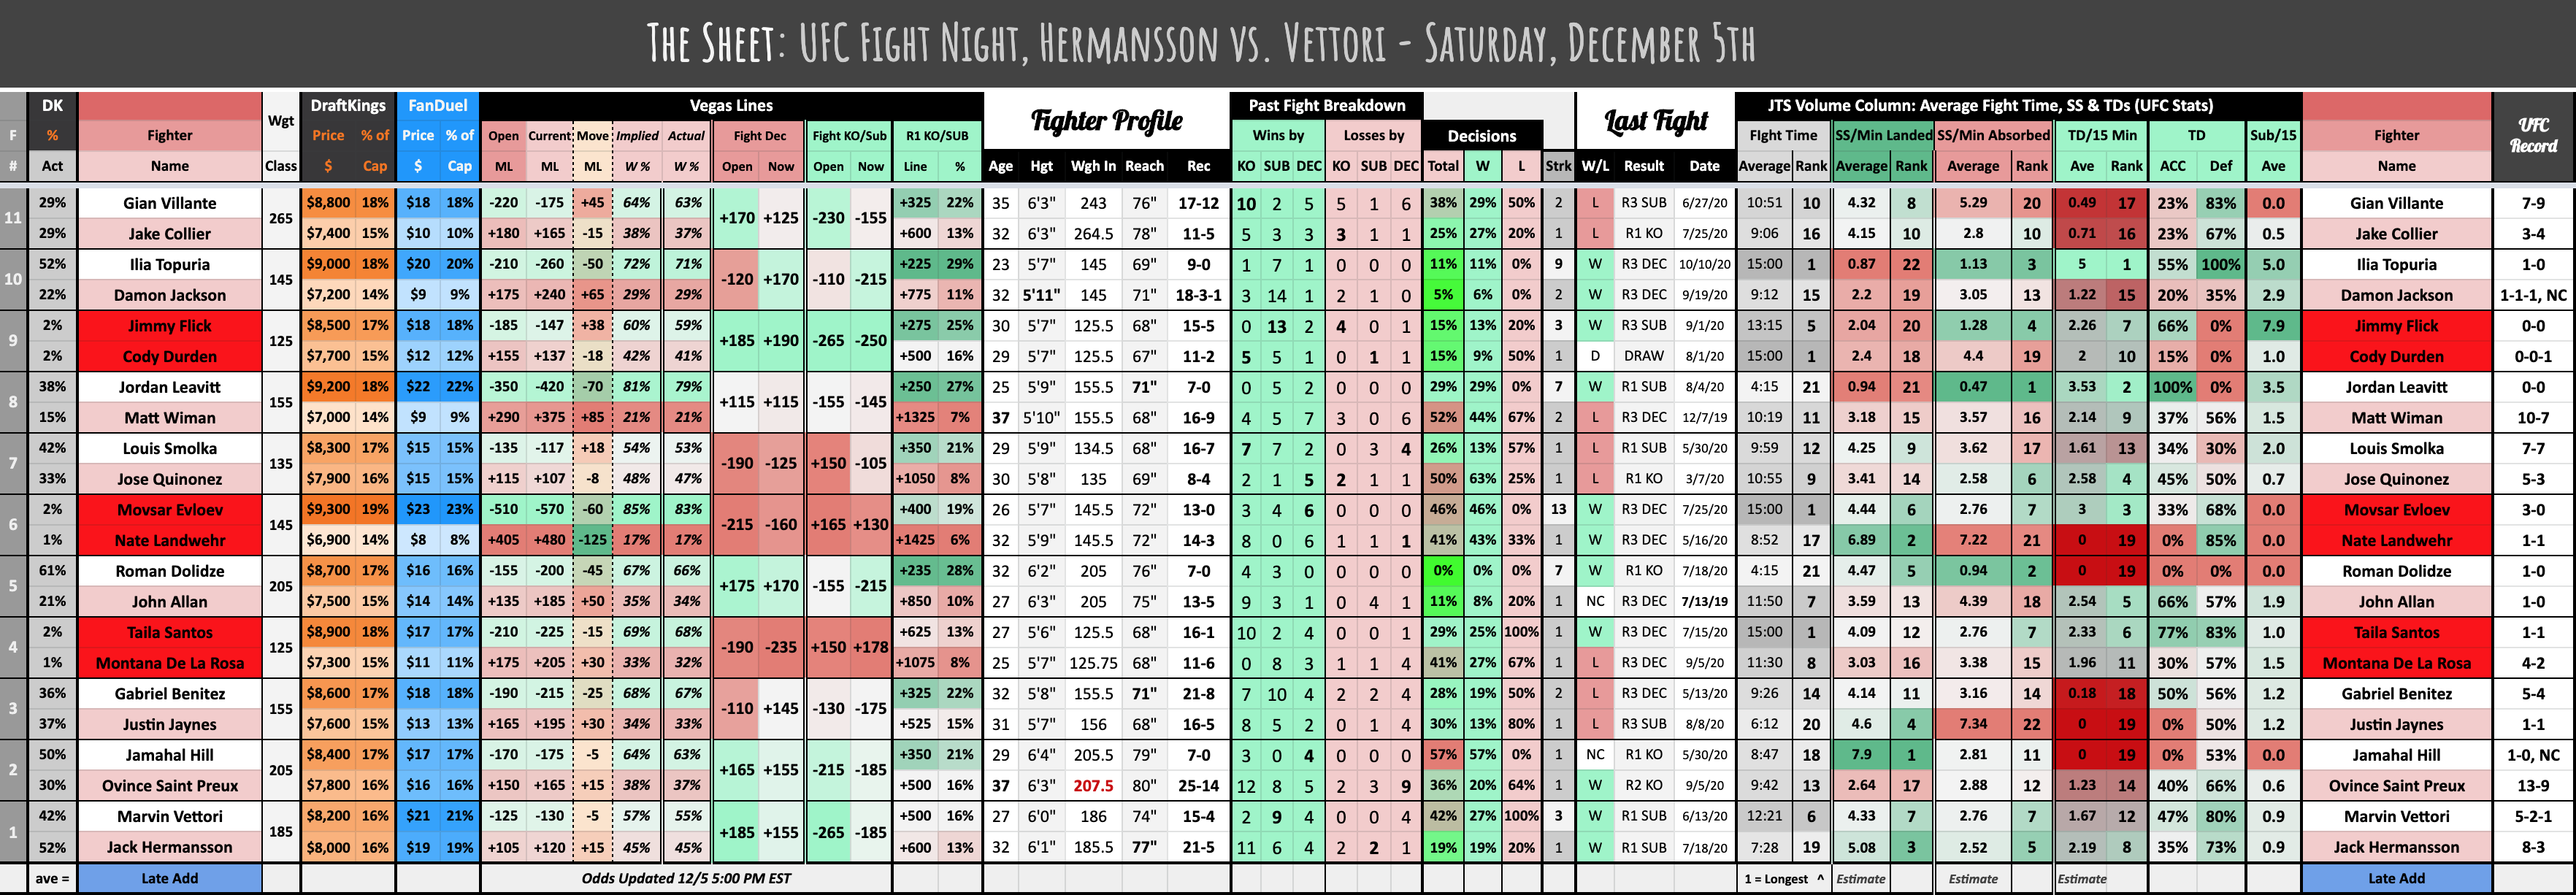 The Sheet: UFC Fight Night, Hermansson vs. Vettori - Saturday, December 5th